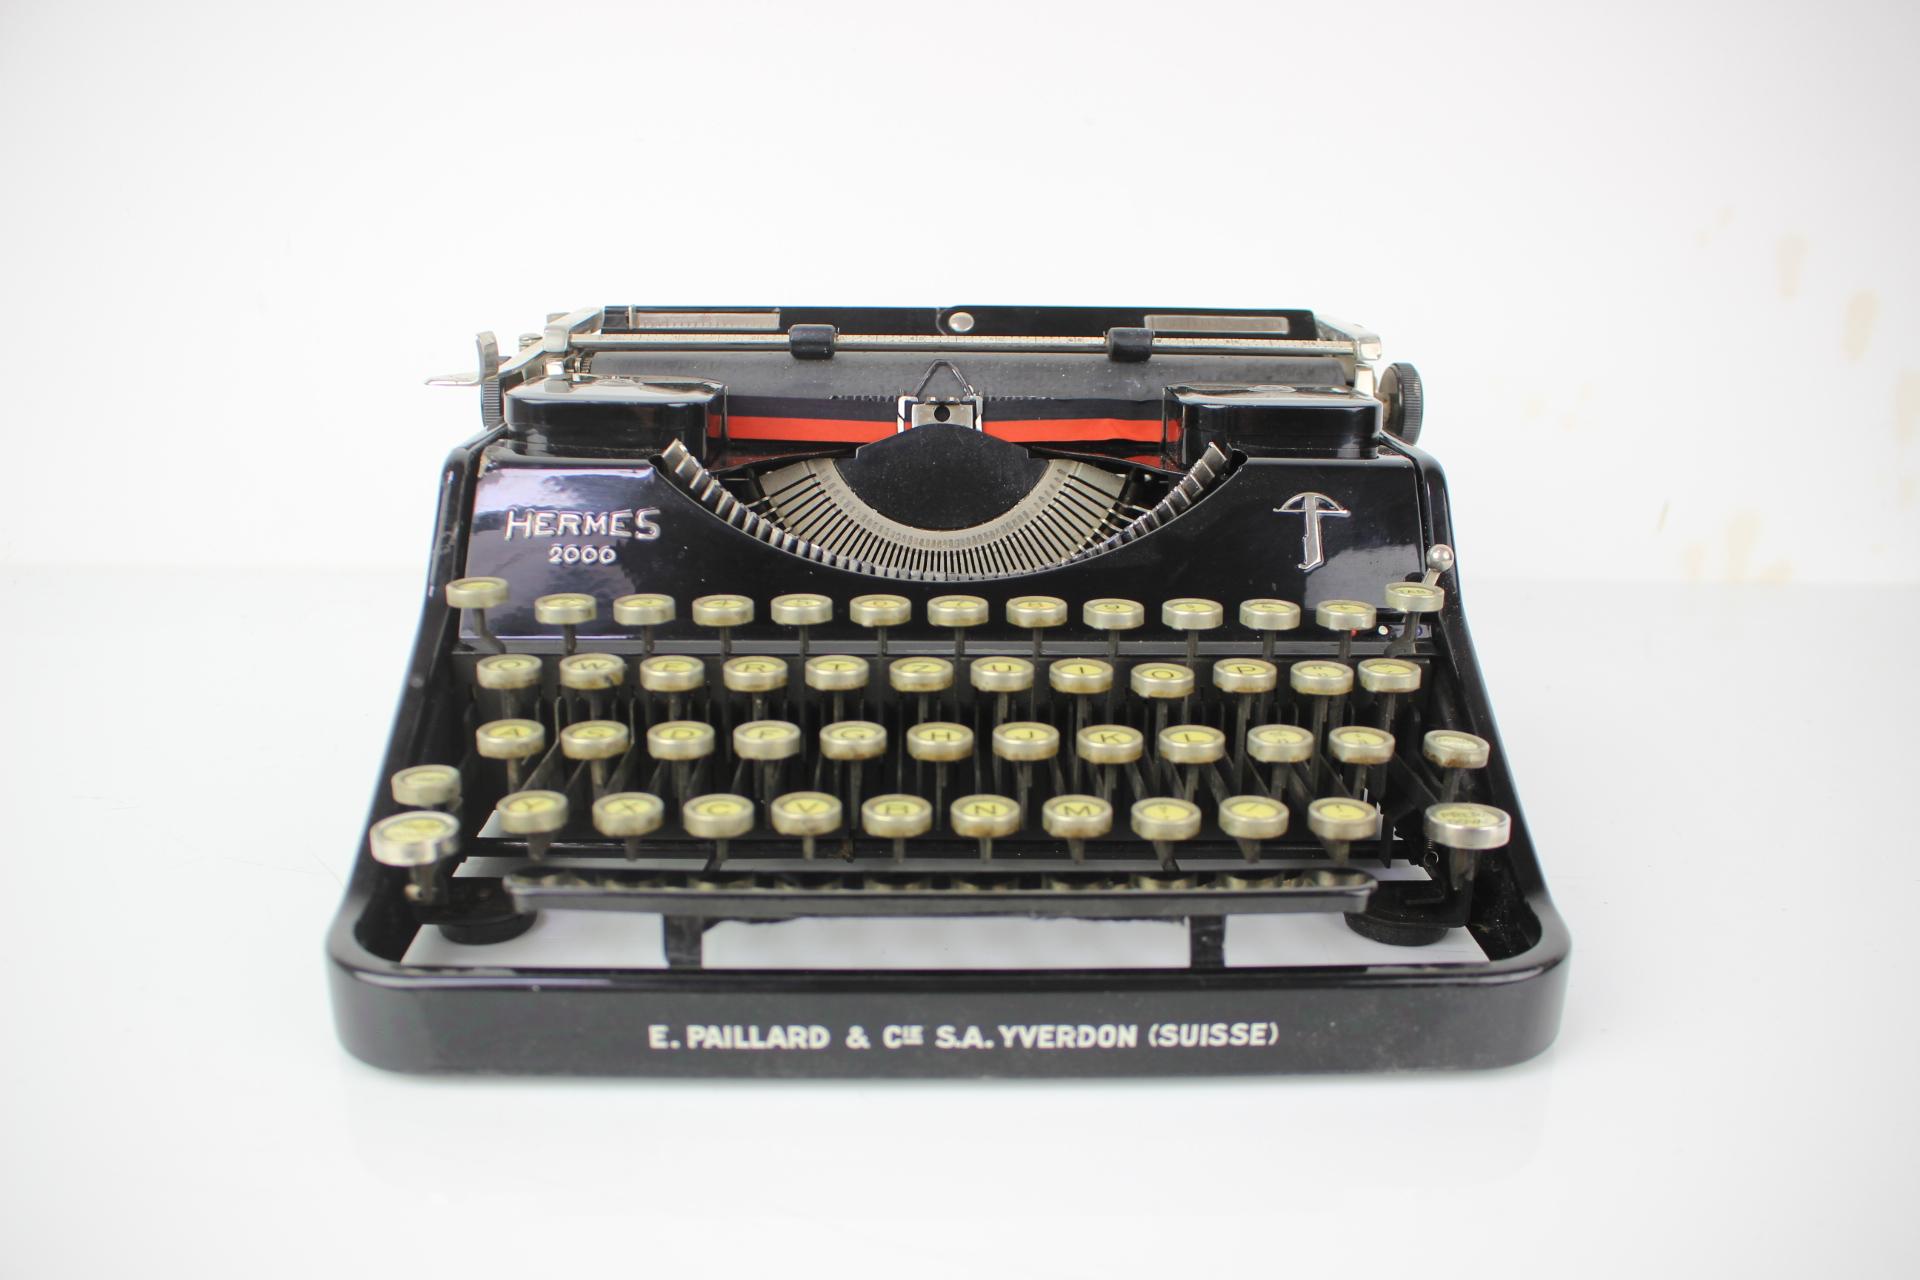 hermes media typewriter